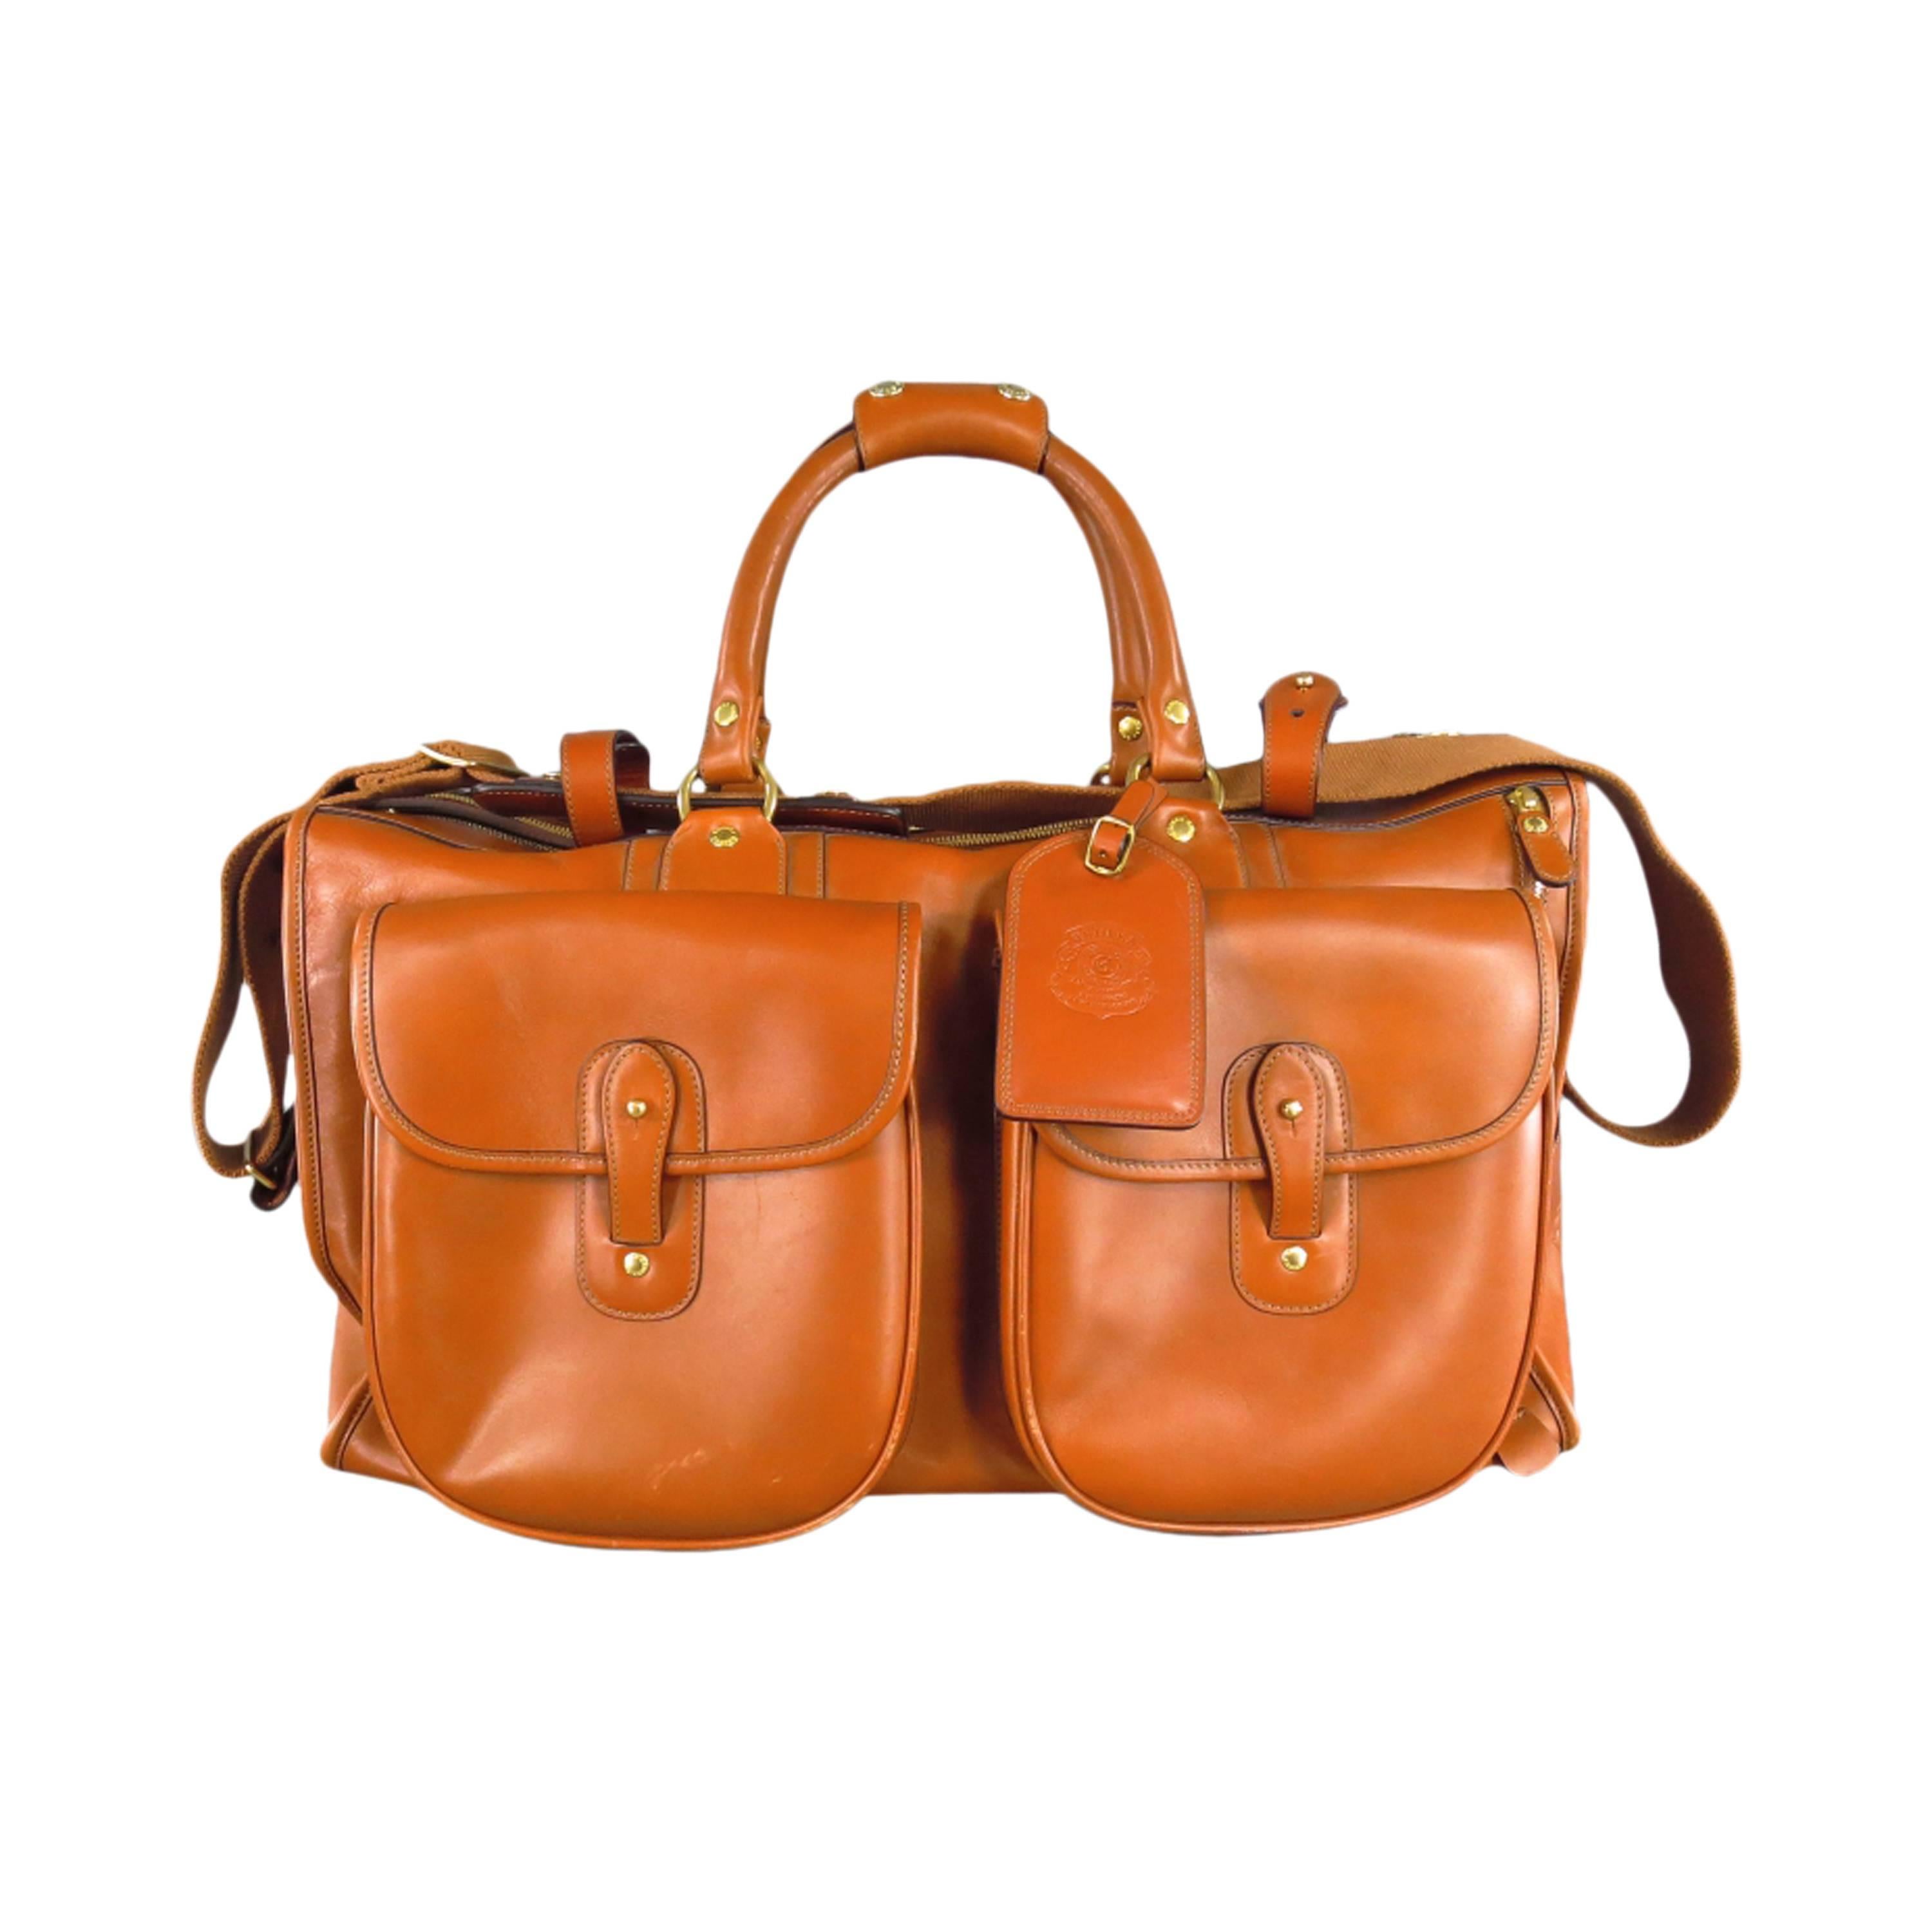 GHURKA -Express No. 2- Tan Leather Flap Pockets Weekender Travel Bag